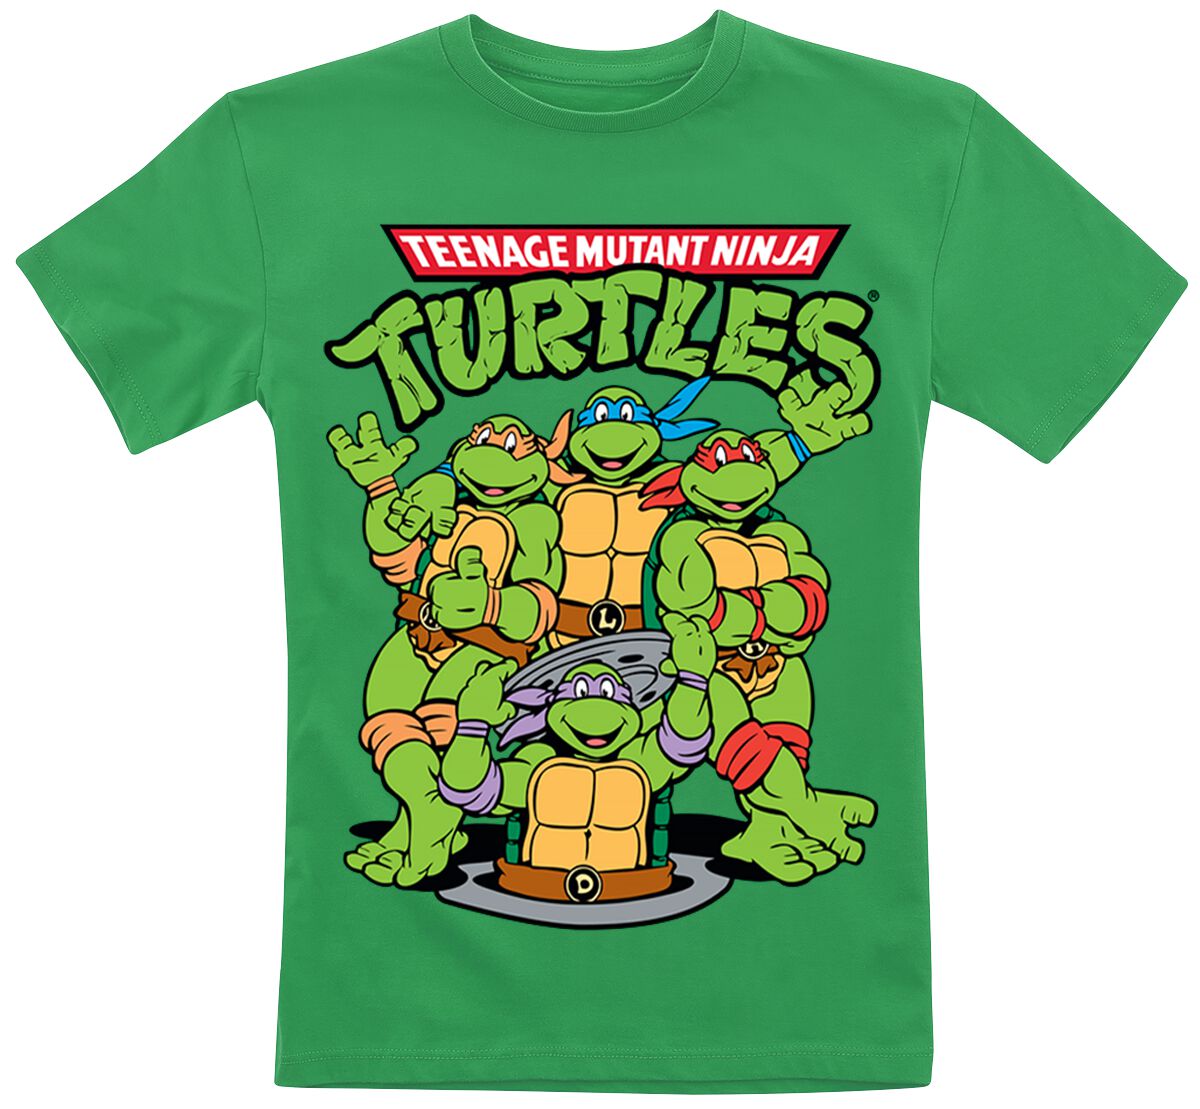 Teenage Mutant Ninja Turtles Kids - Group T-Shirt grün in 104